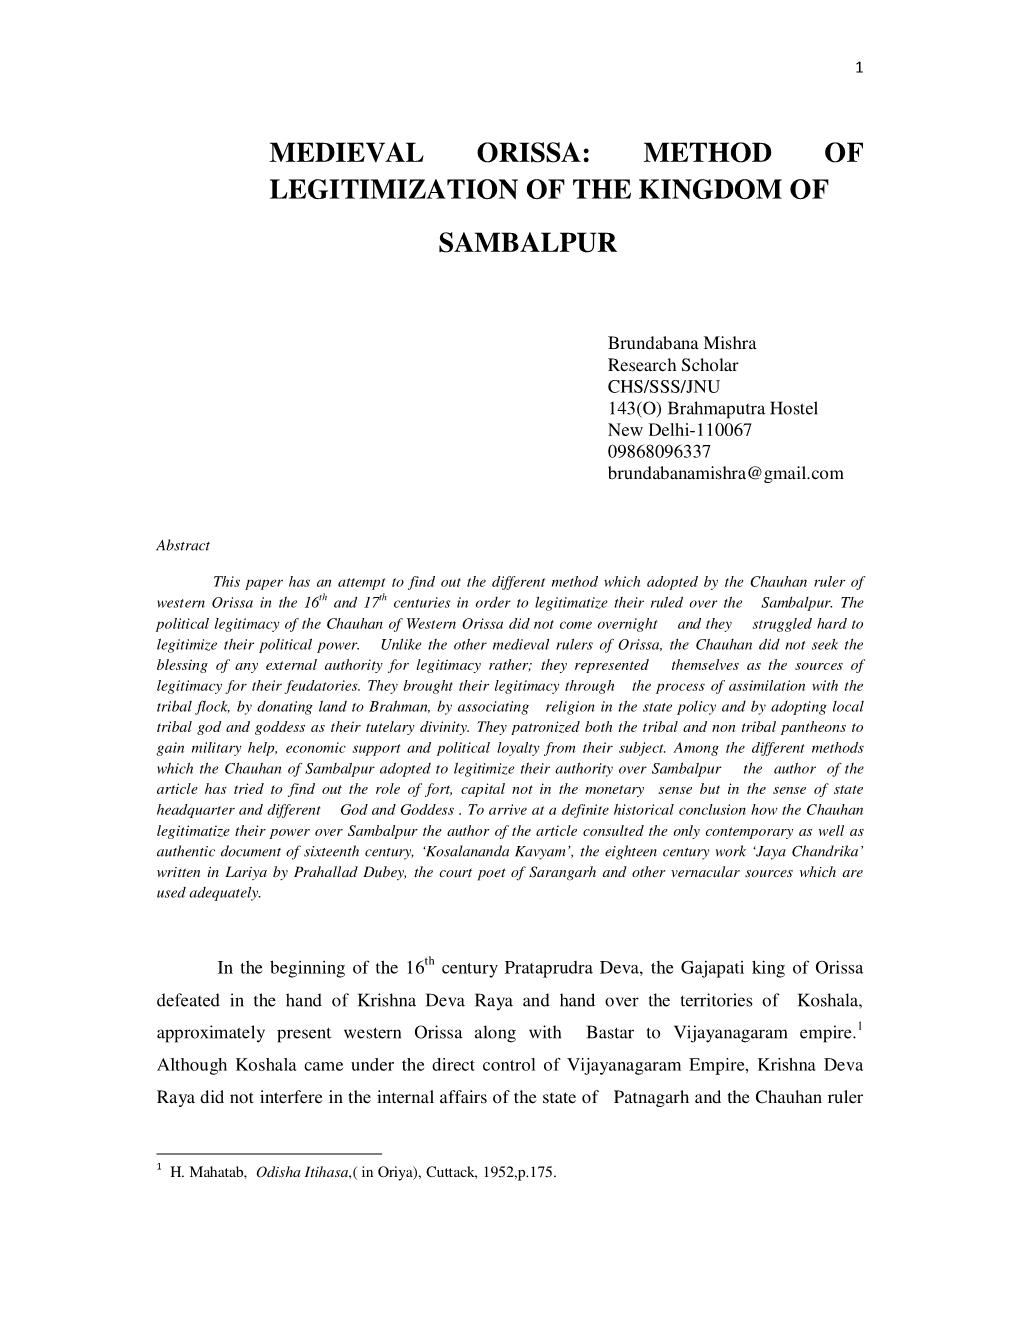 Method of Legitimization of the Kingdom of Sambalpur